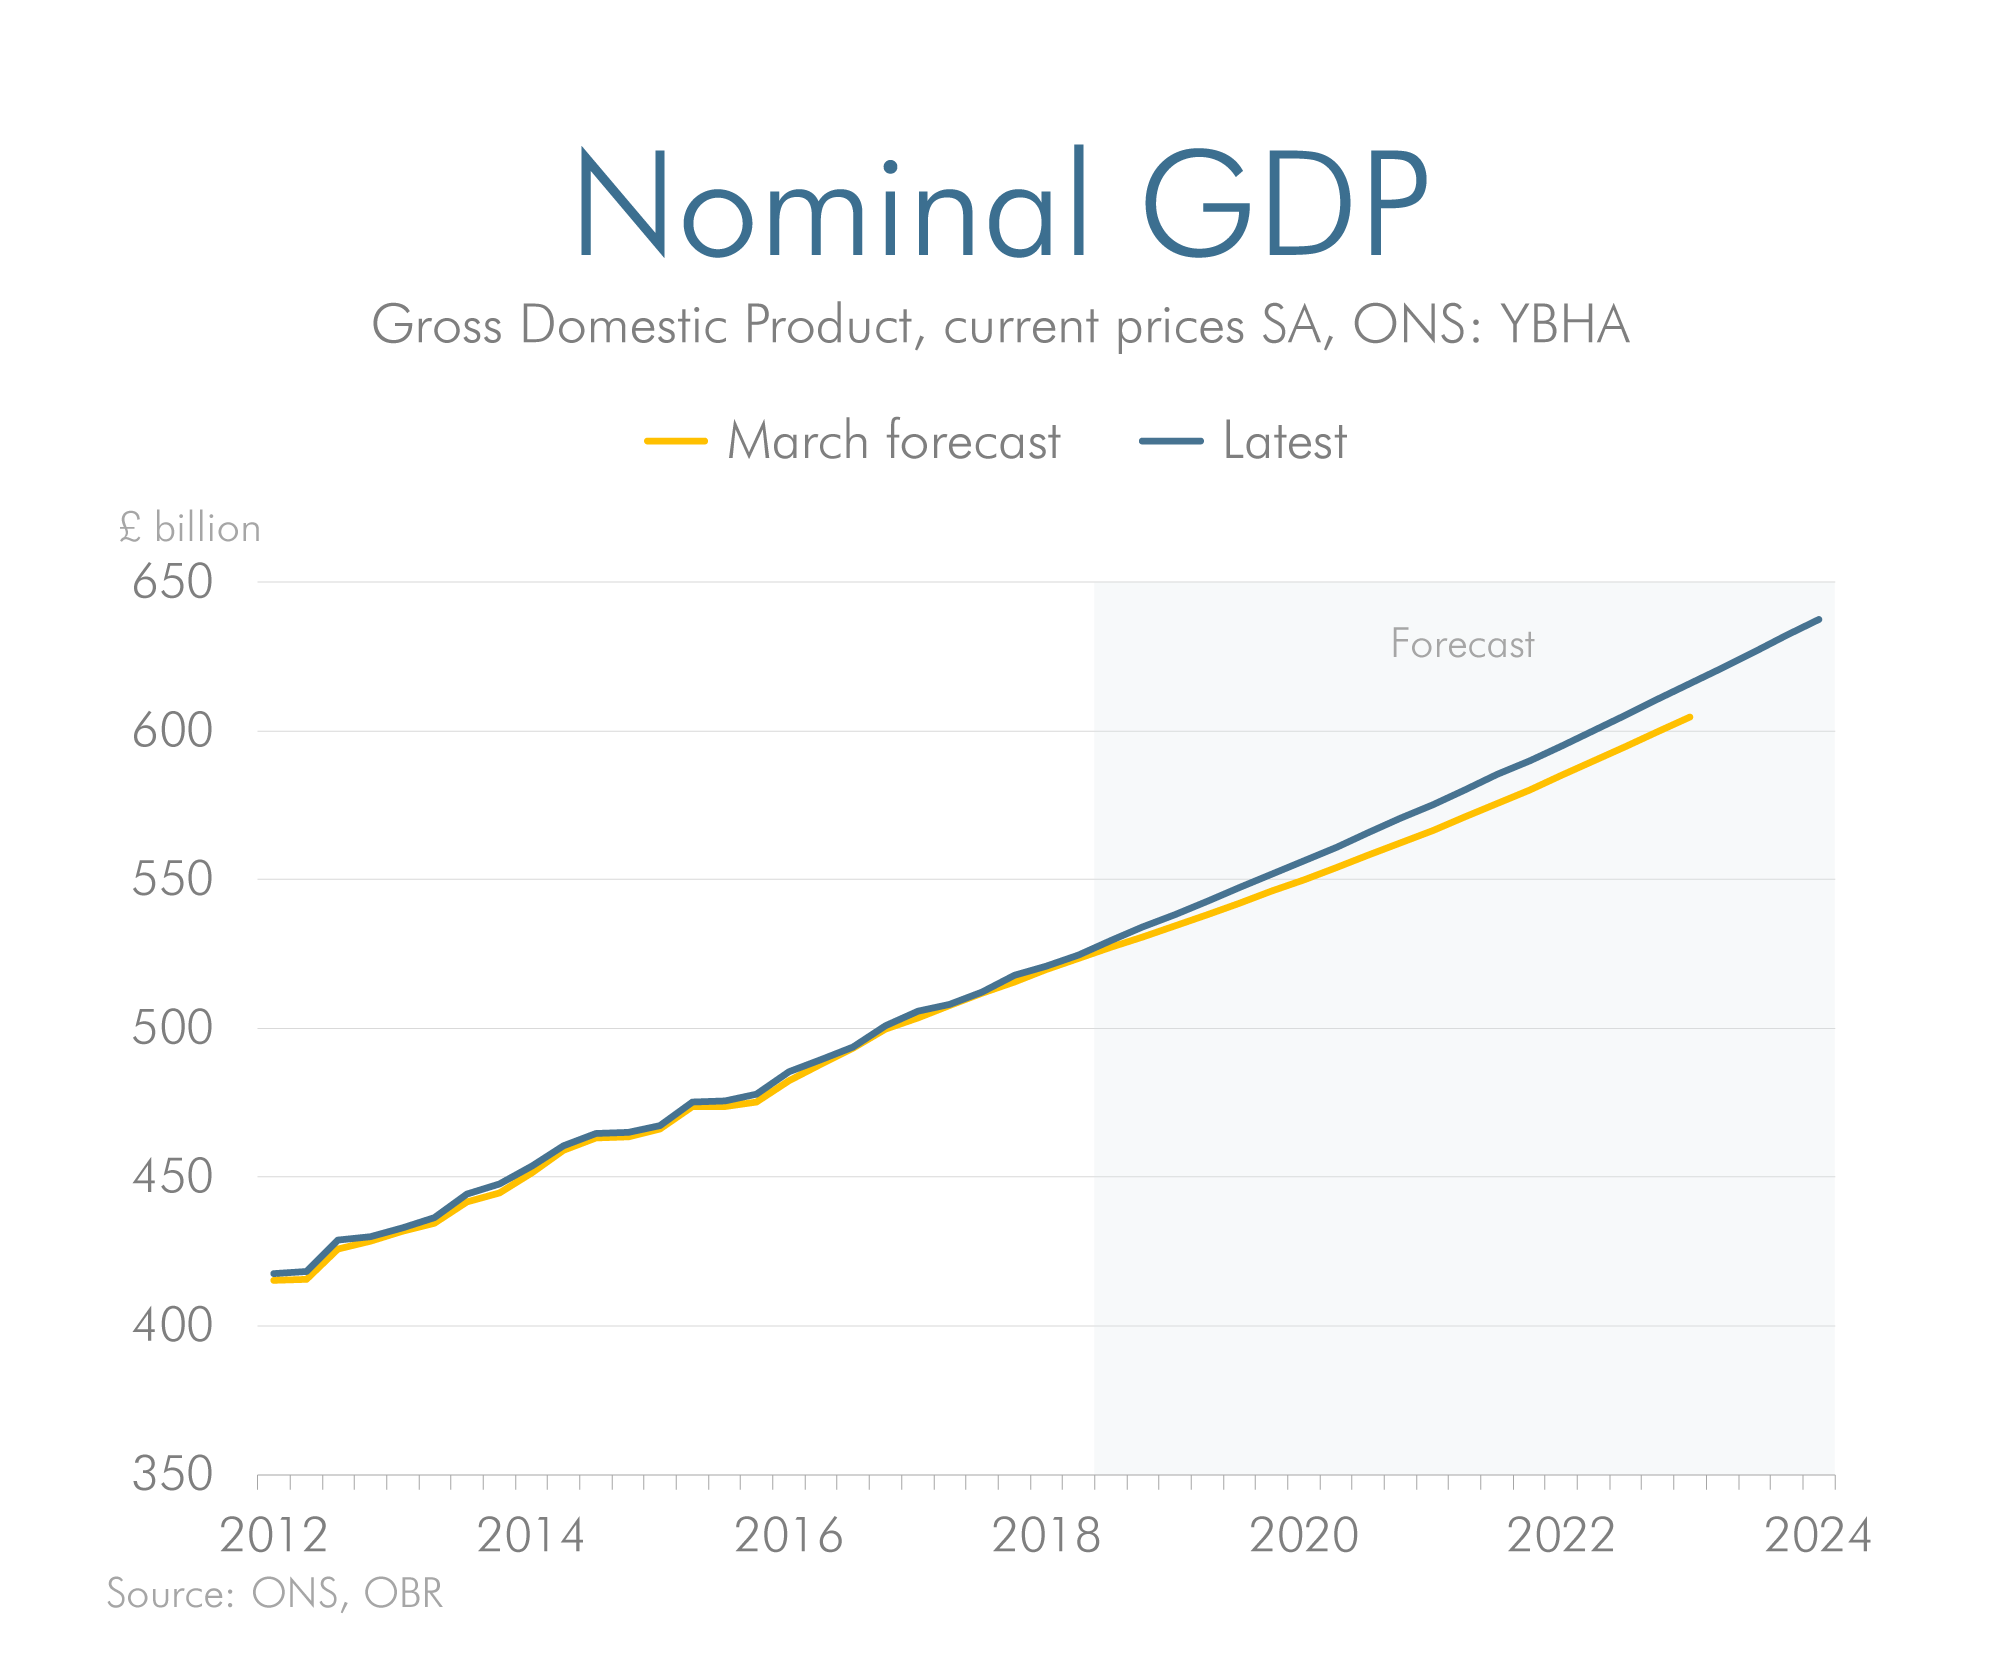 Nominal GDP previous vs latest forecast